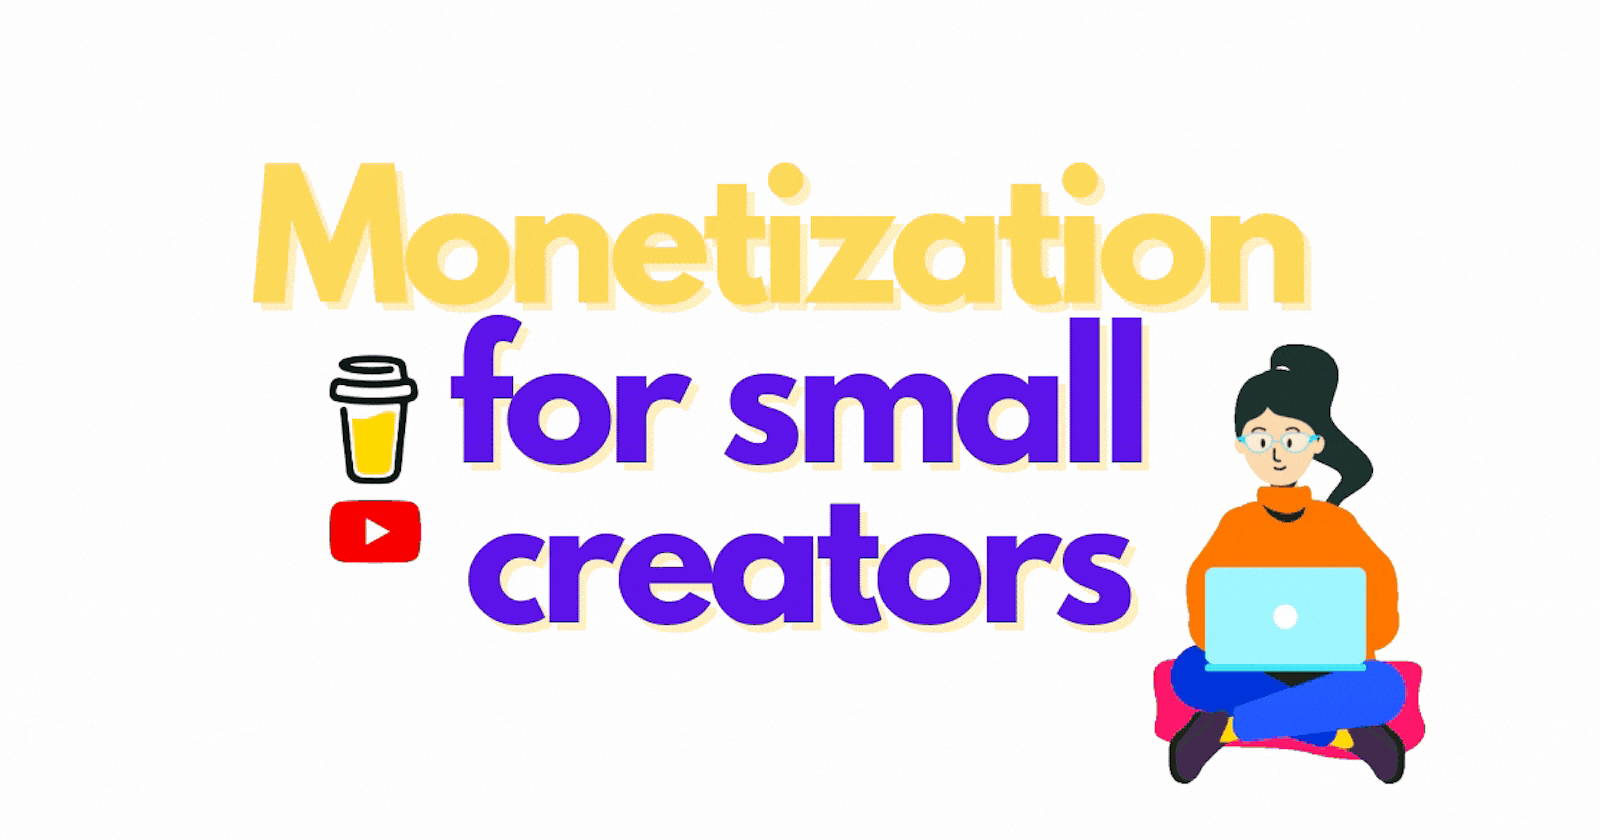 Monetization for small creators